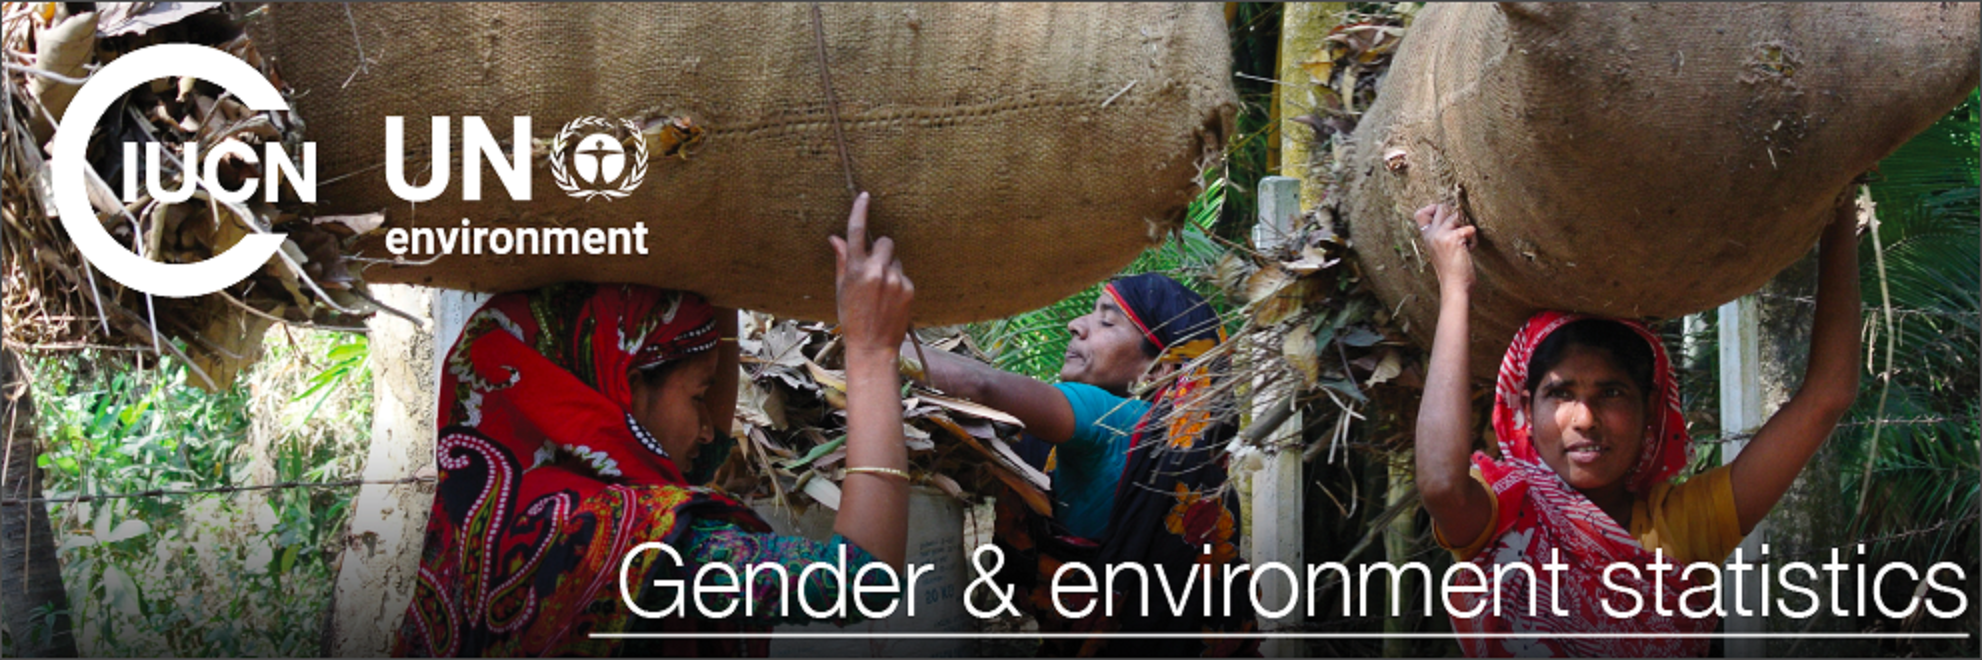 Expert consultation on gender-environment statistics